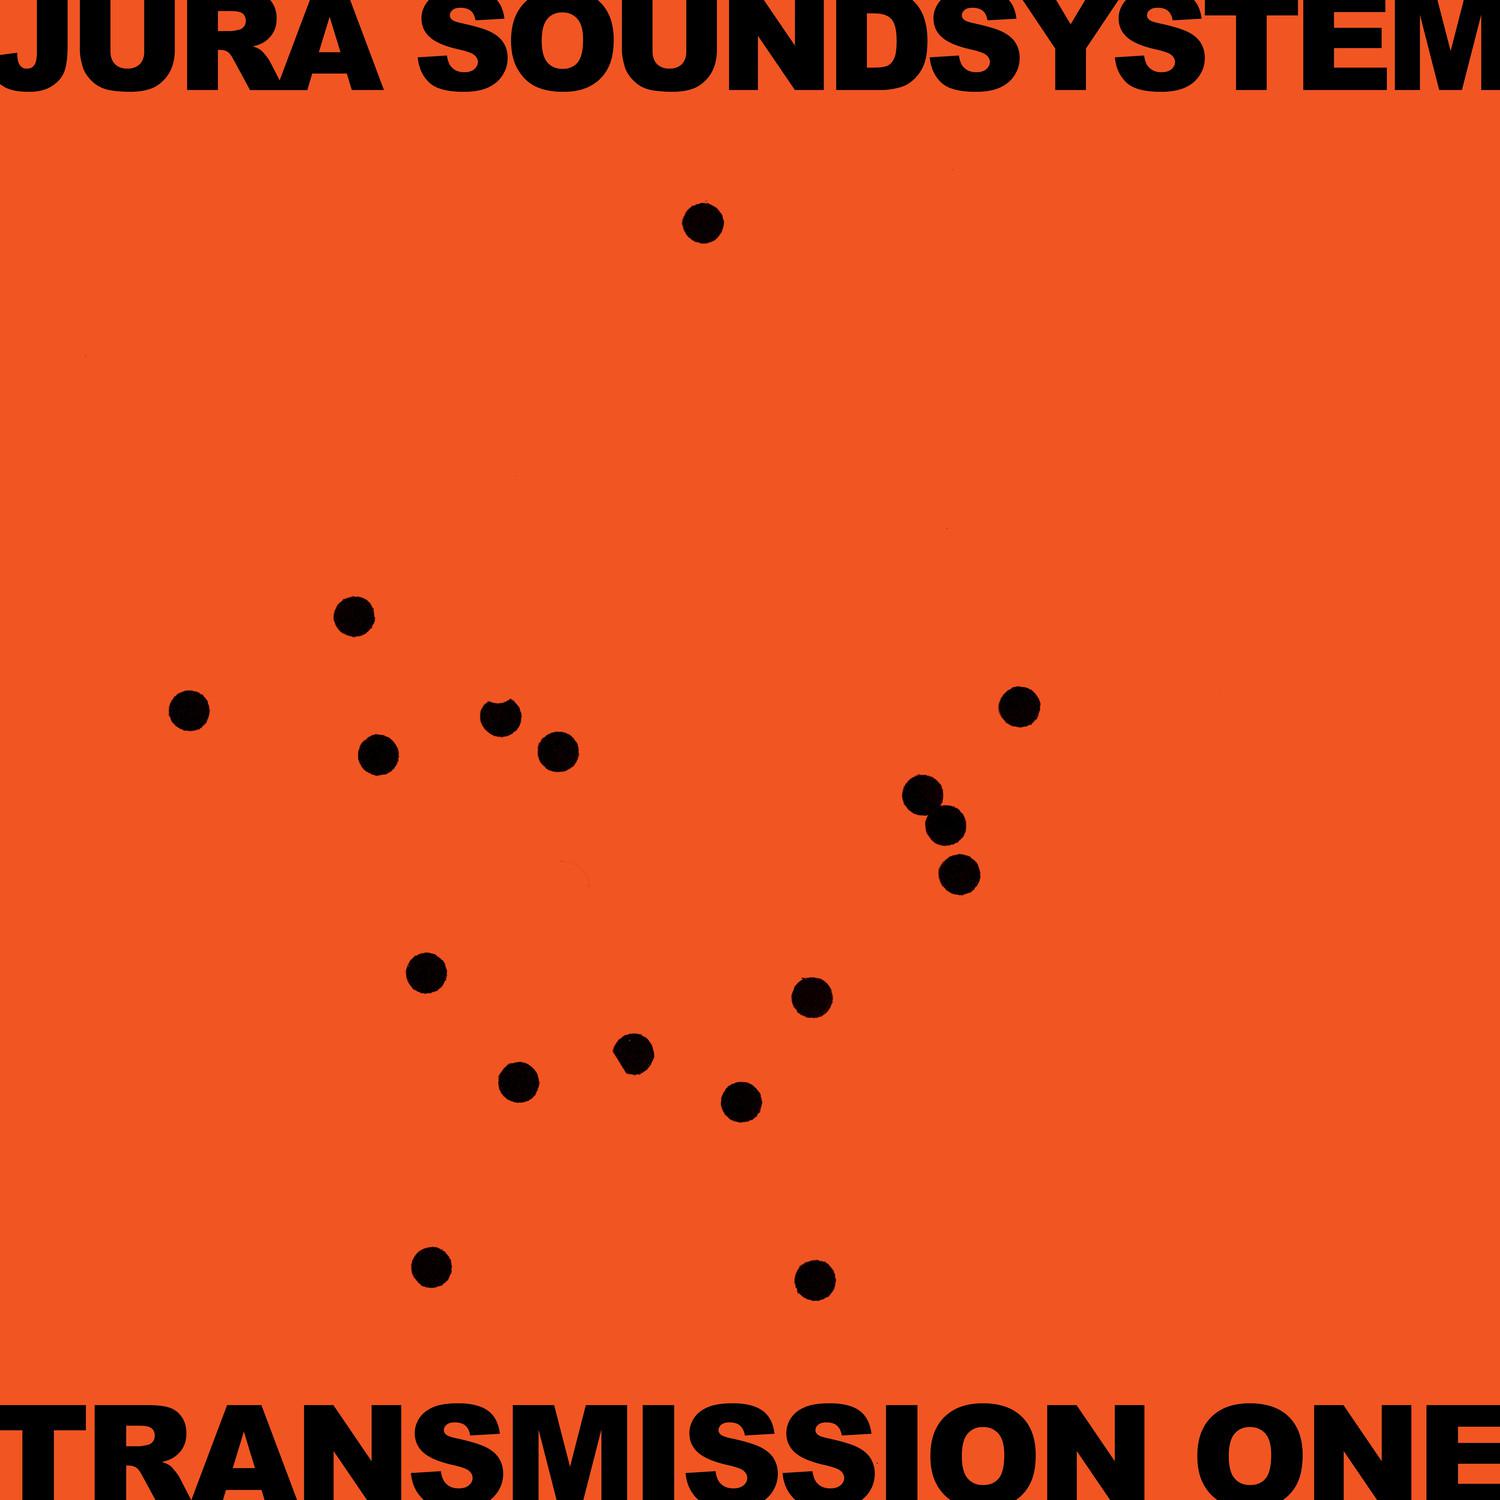 Ooh La La (Jura Soundsystem Edit)